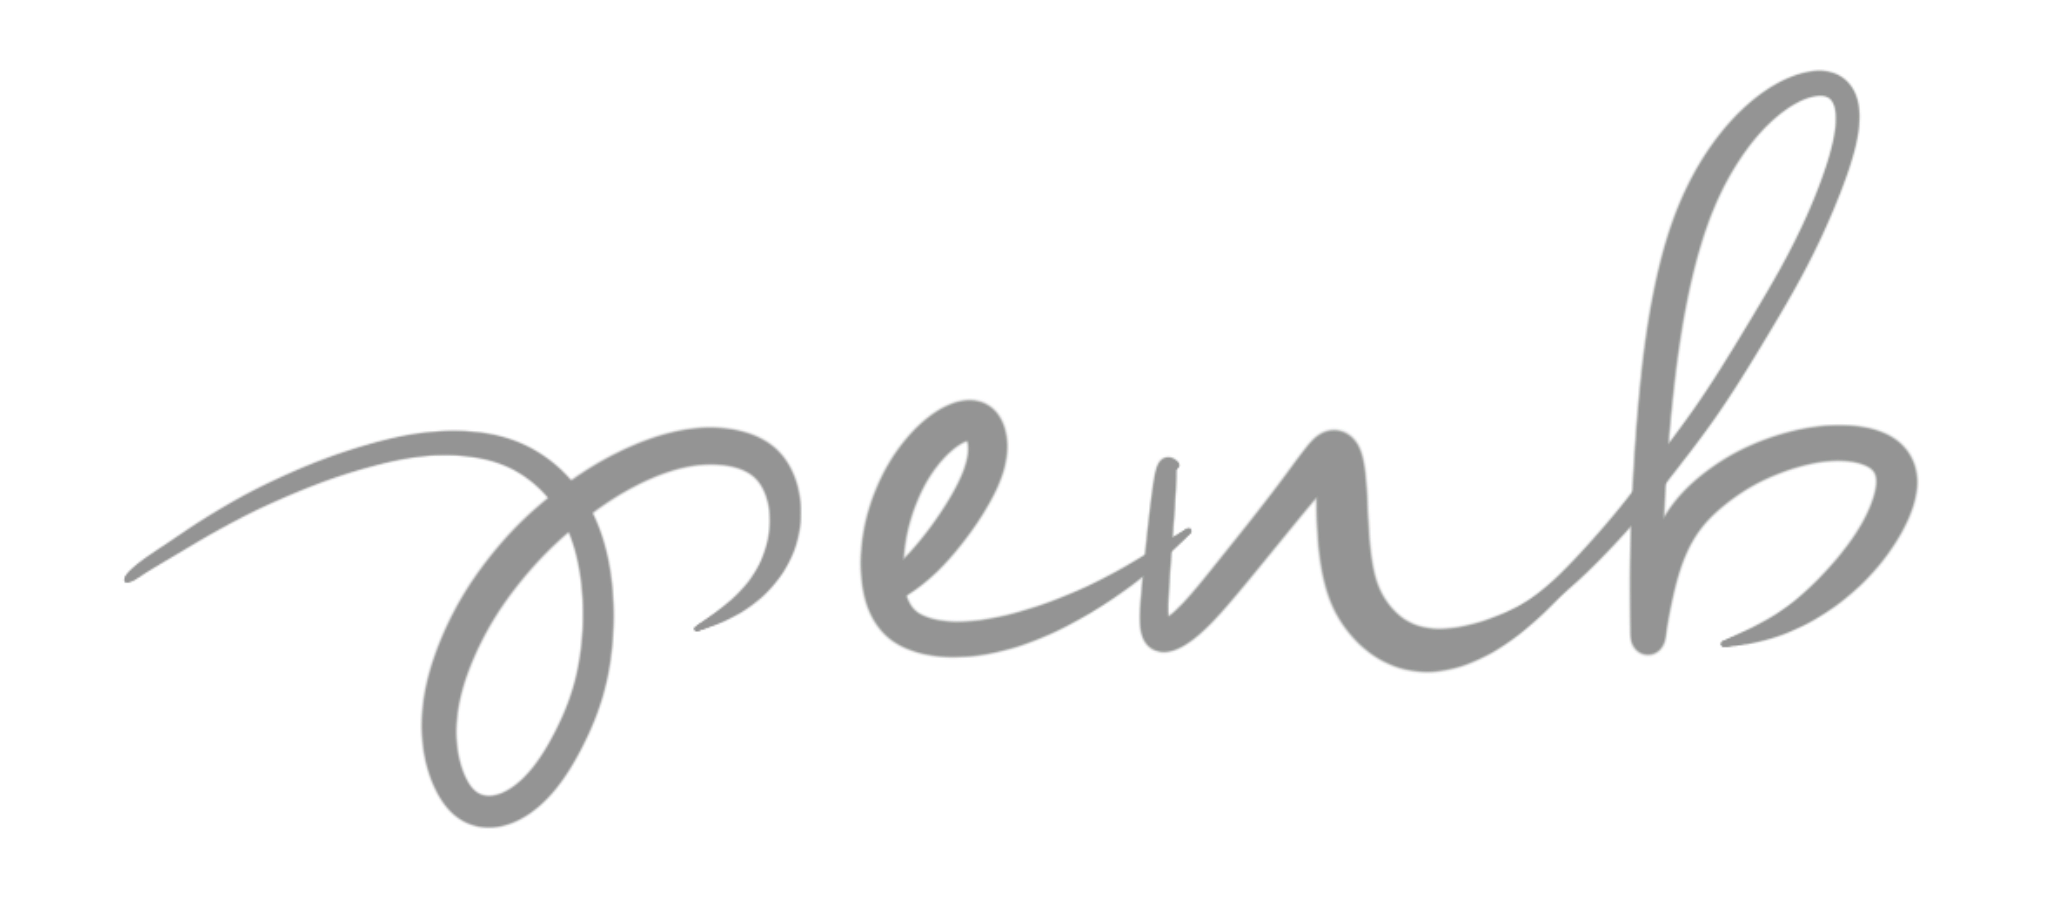 penb_ – Opening Soon